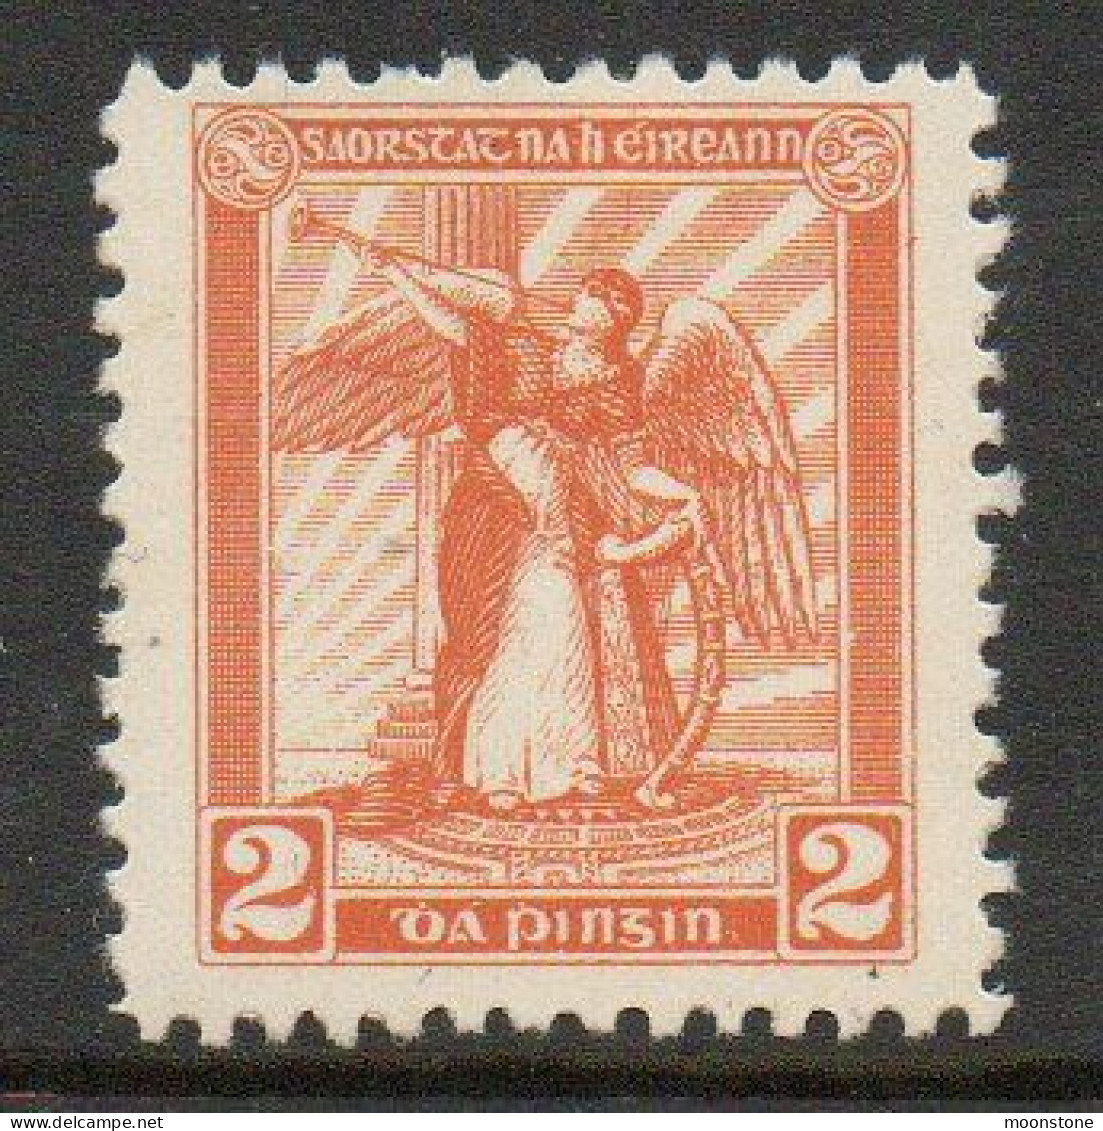 Ireland 1922 Dollard Printing House Stamp Essay In Yellow-orange, Lightly Hinged Mint - Ongebruikt